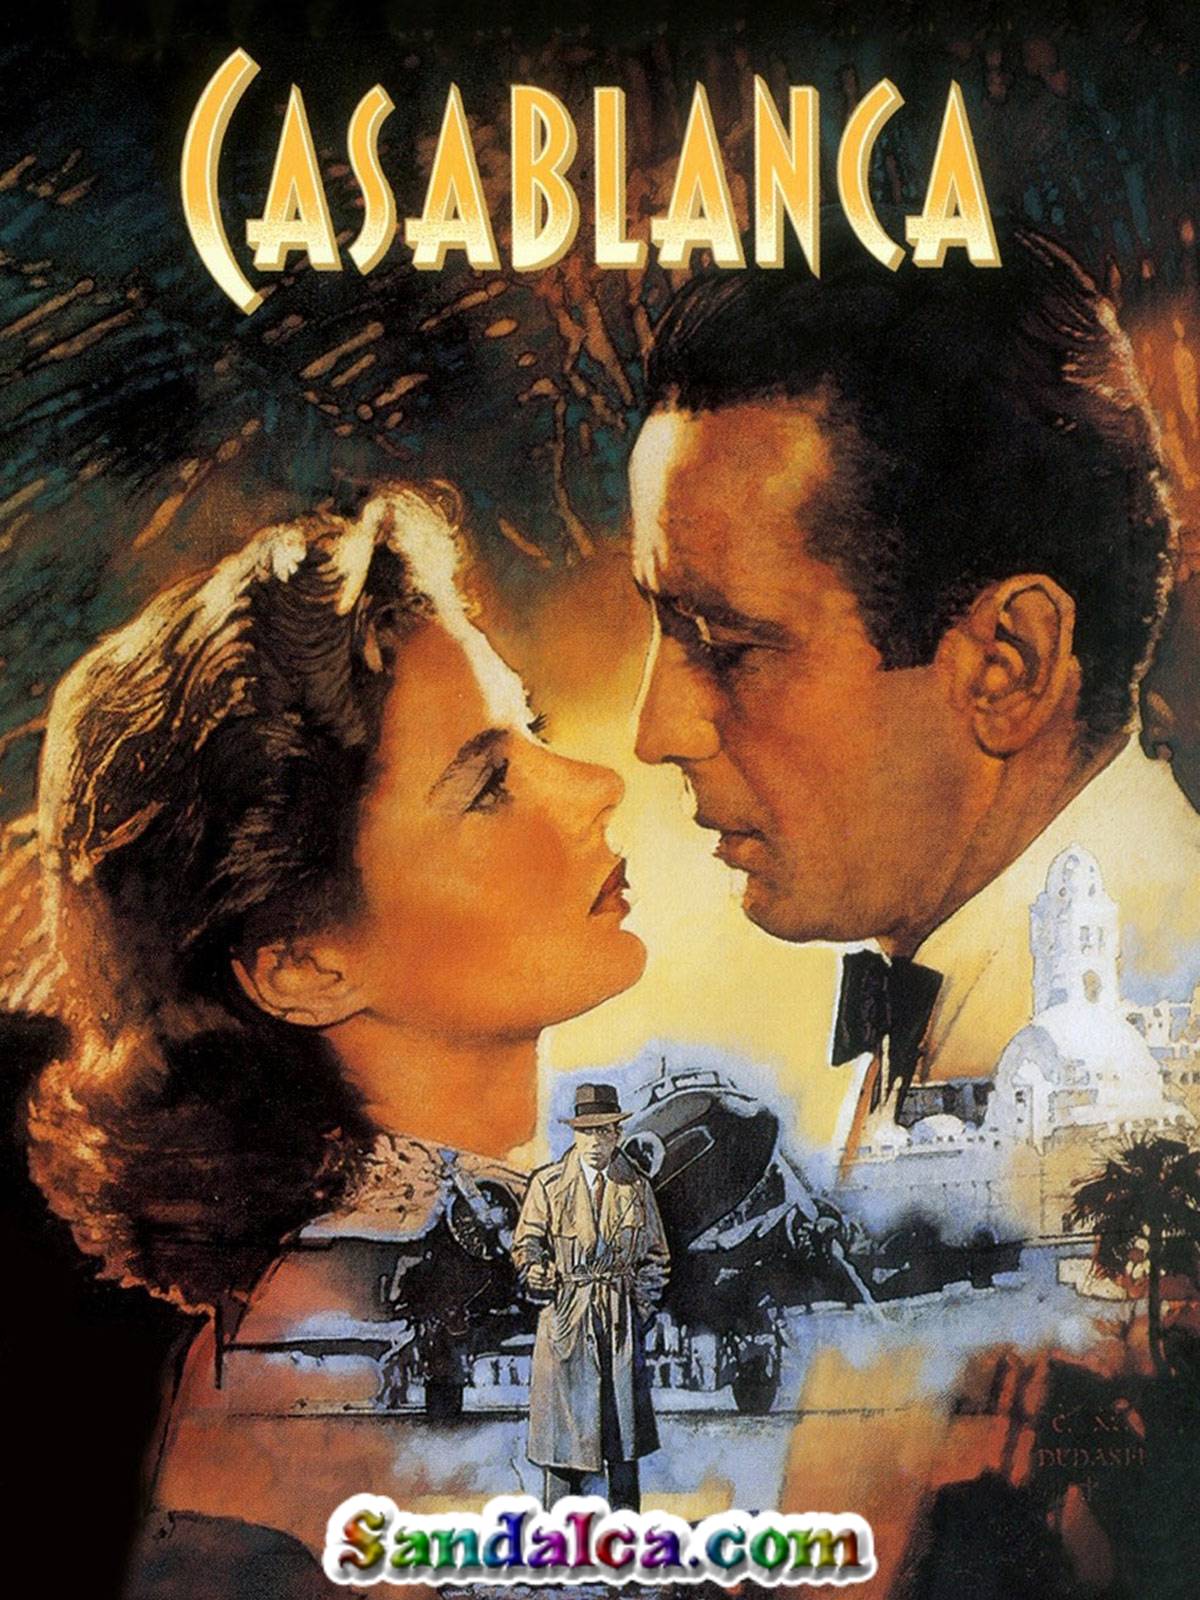 Kazablanka - Casablanca Türkçe Dublaj indir | XviD | 1942